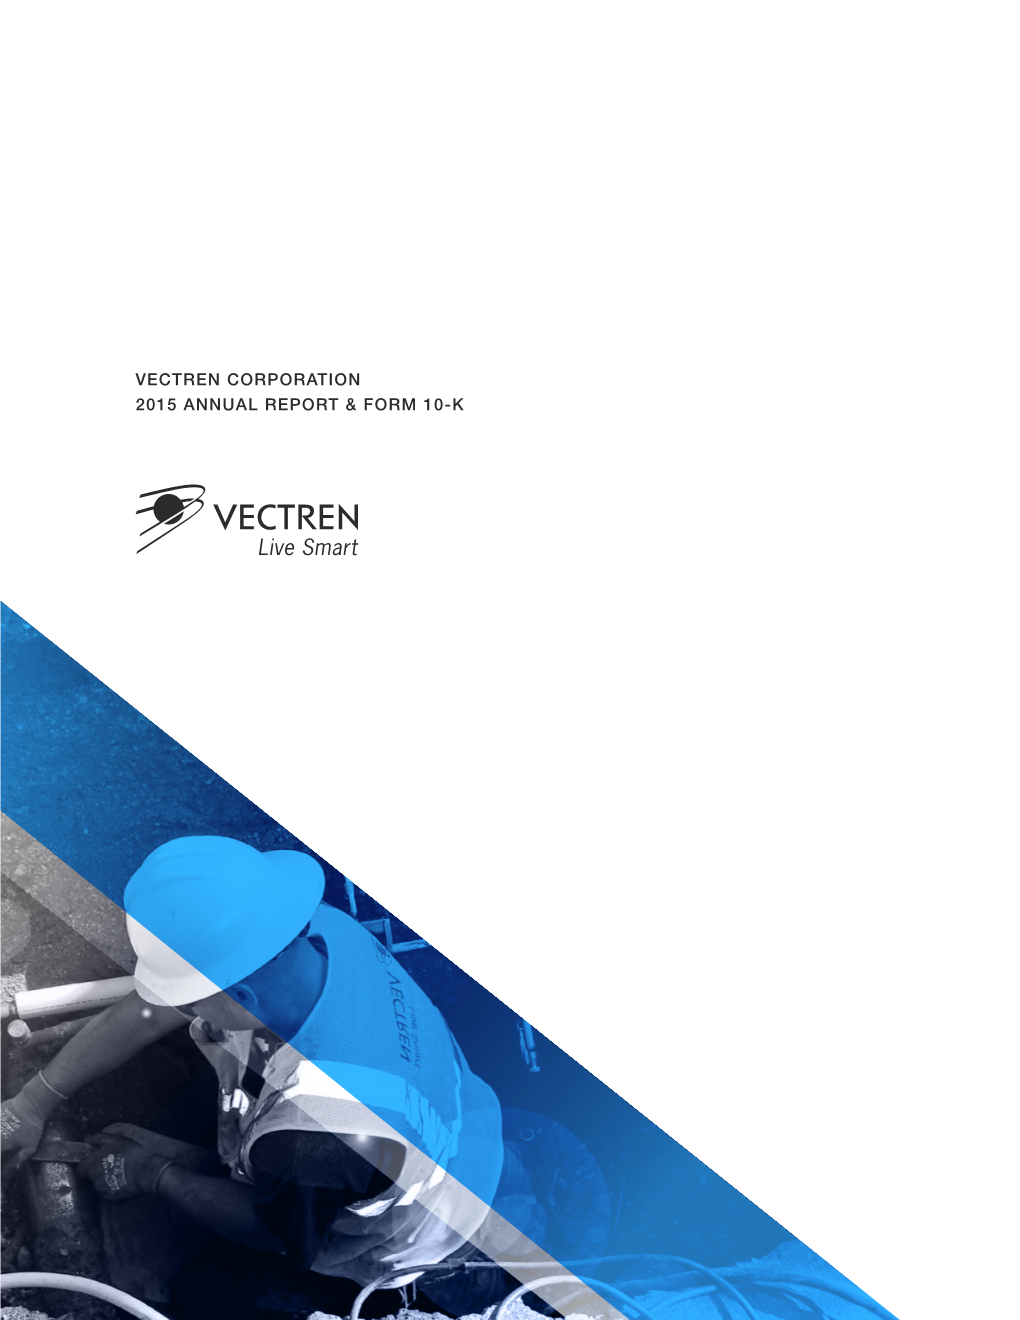 Vectren Corporation 2015 Annual Report & Form 10-K